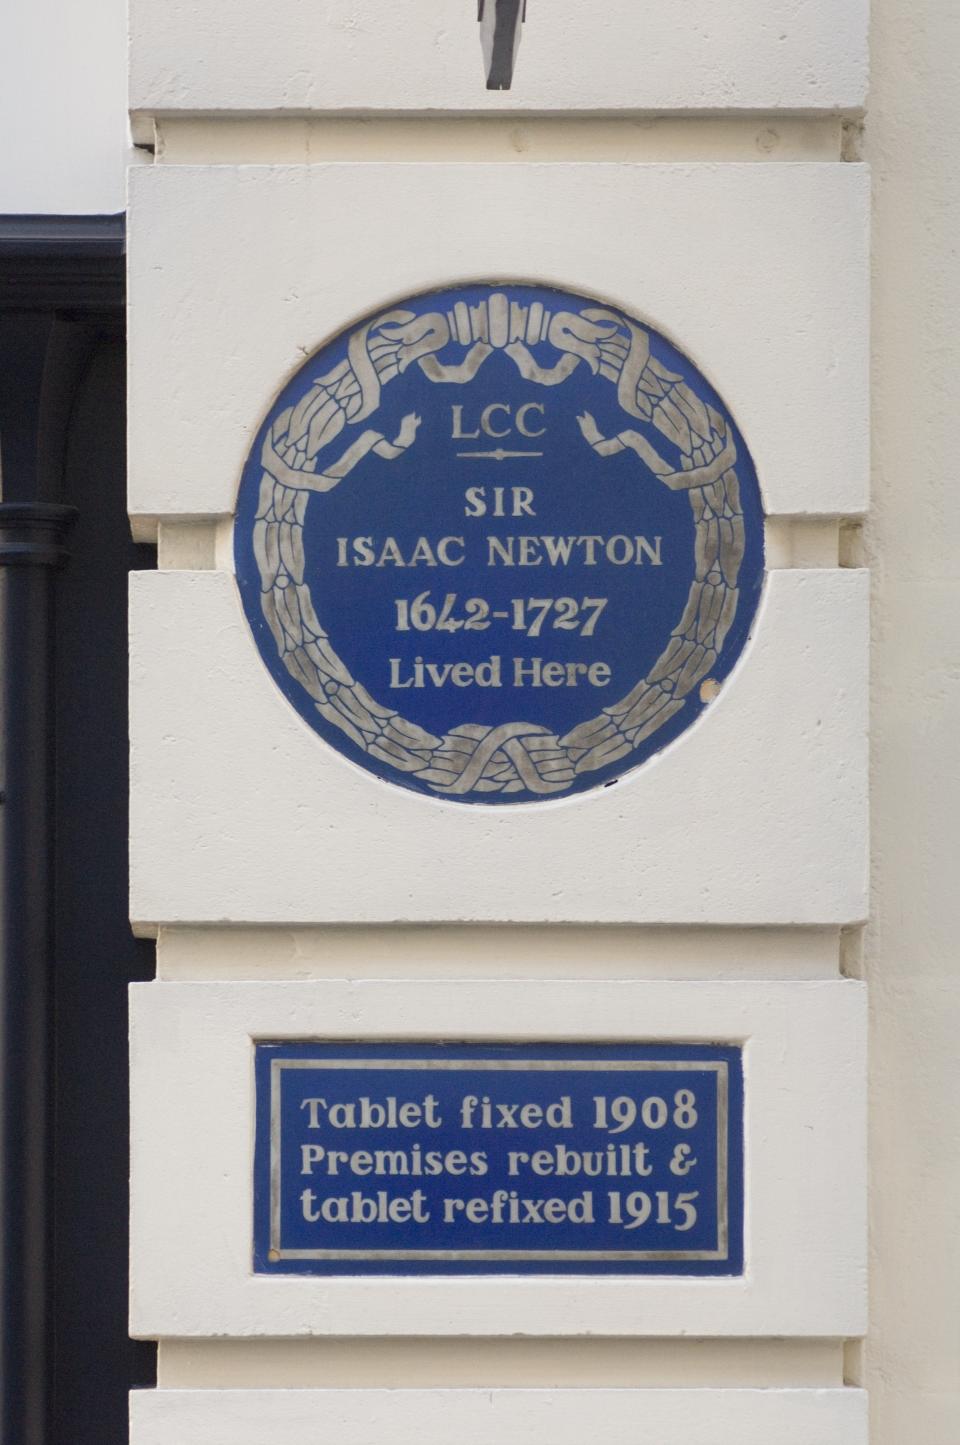 Sir Isaac Newton’s former home on 87 Jermyn Street in Westminster, London.